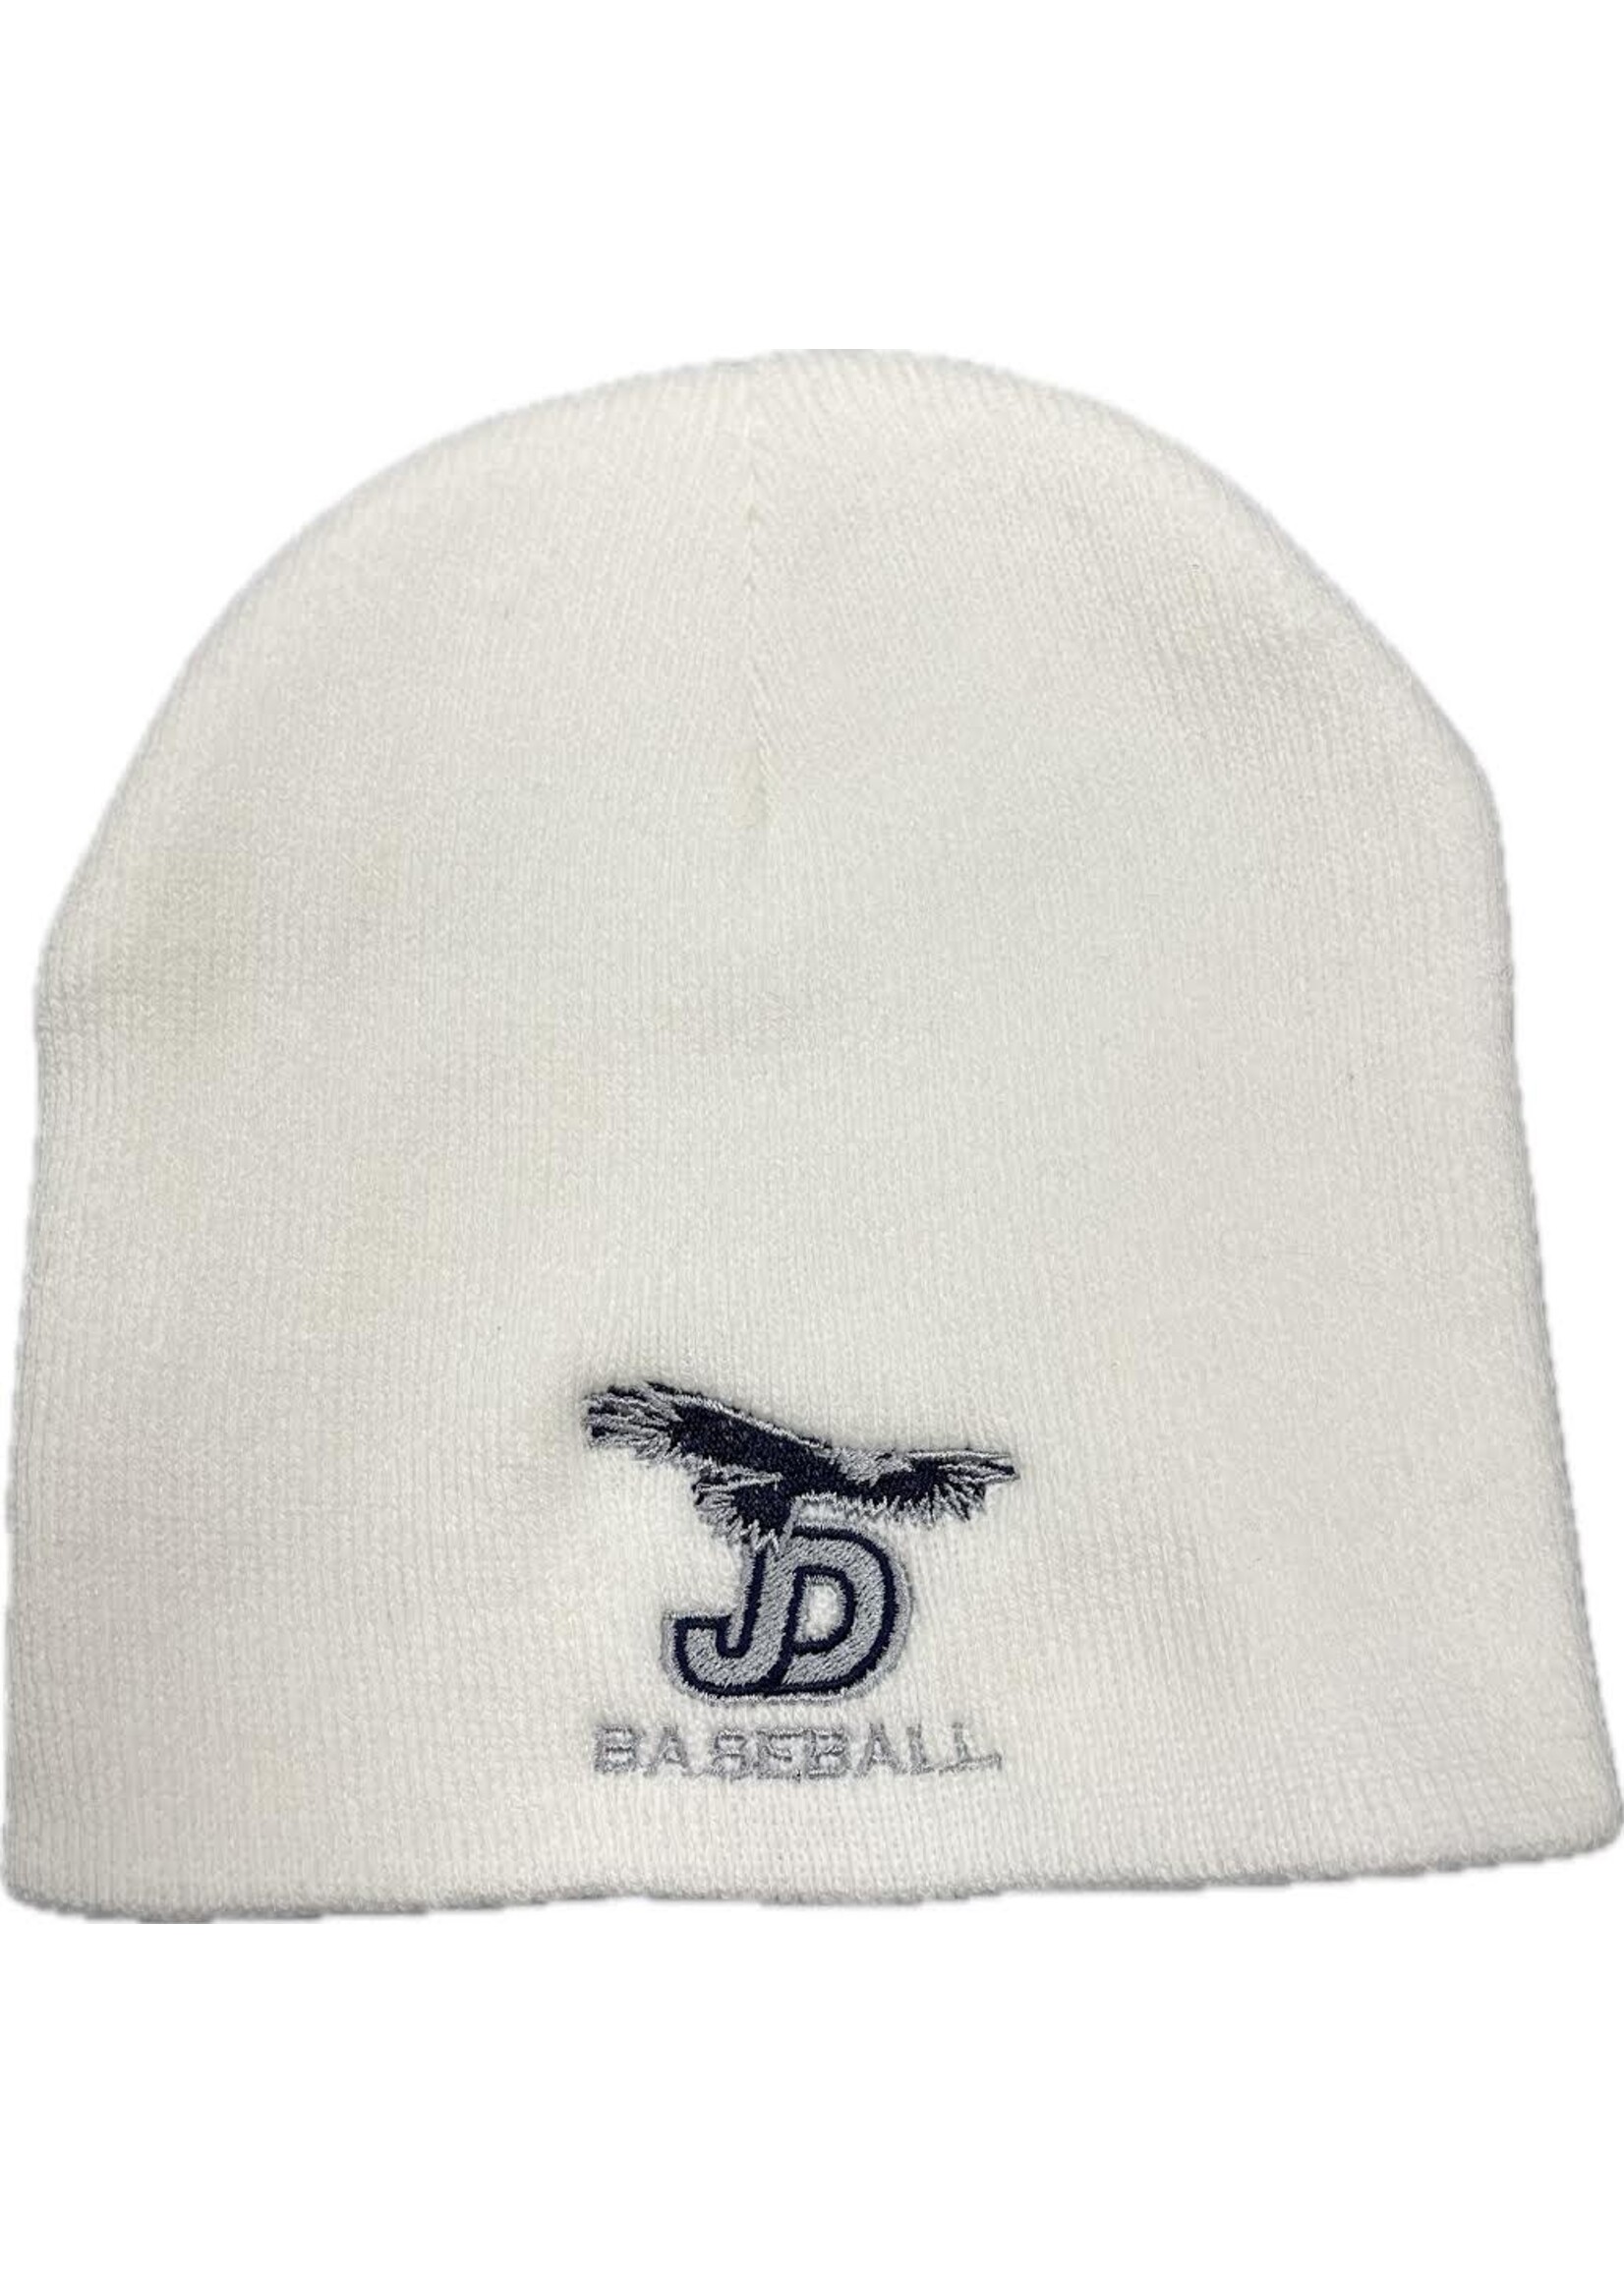 NON-UNIFORM Beanie - JD Eagle Baseball Knit Hat